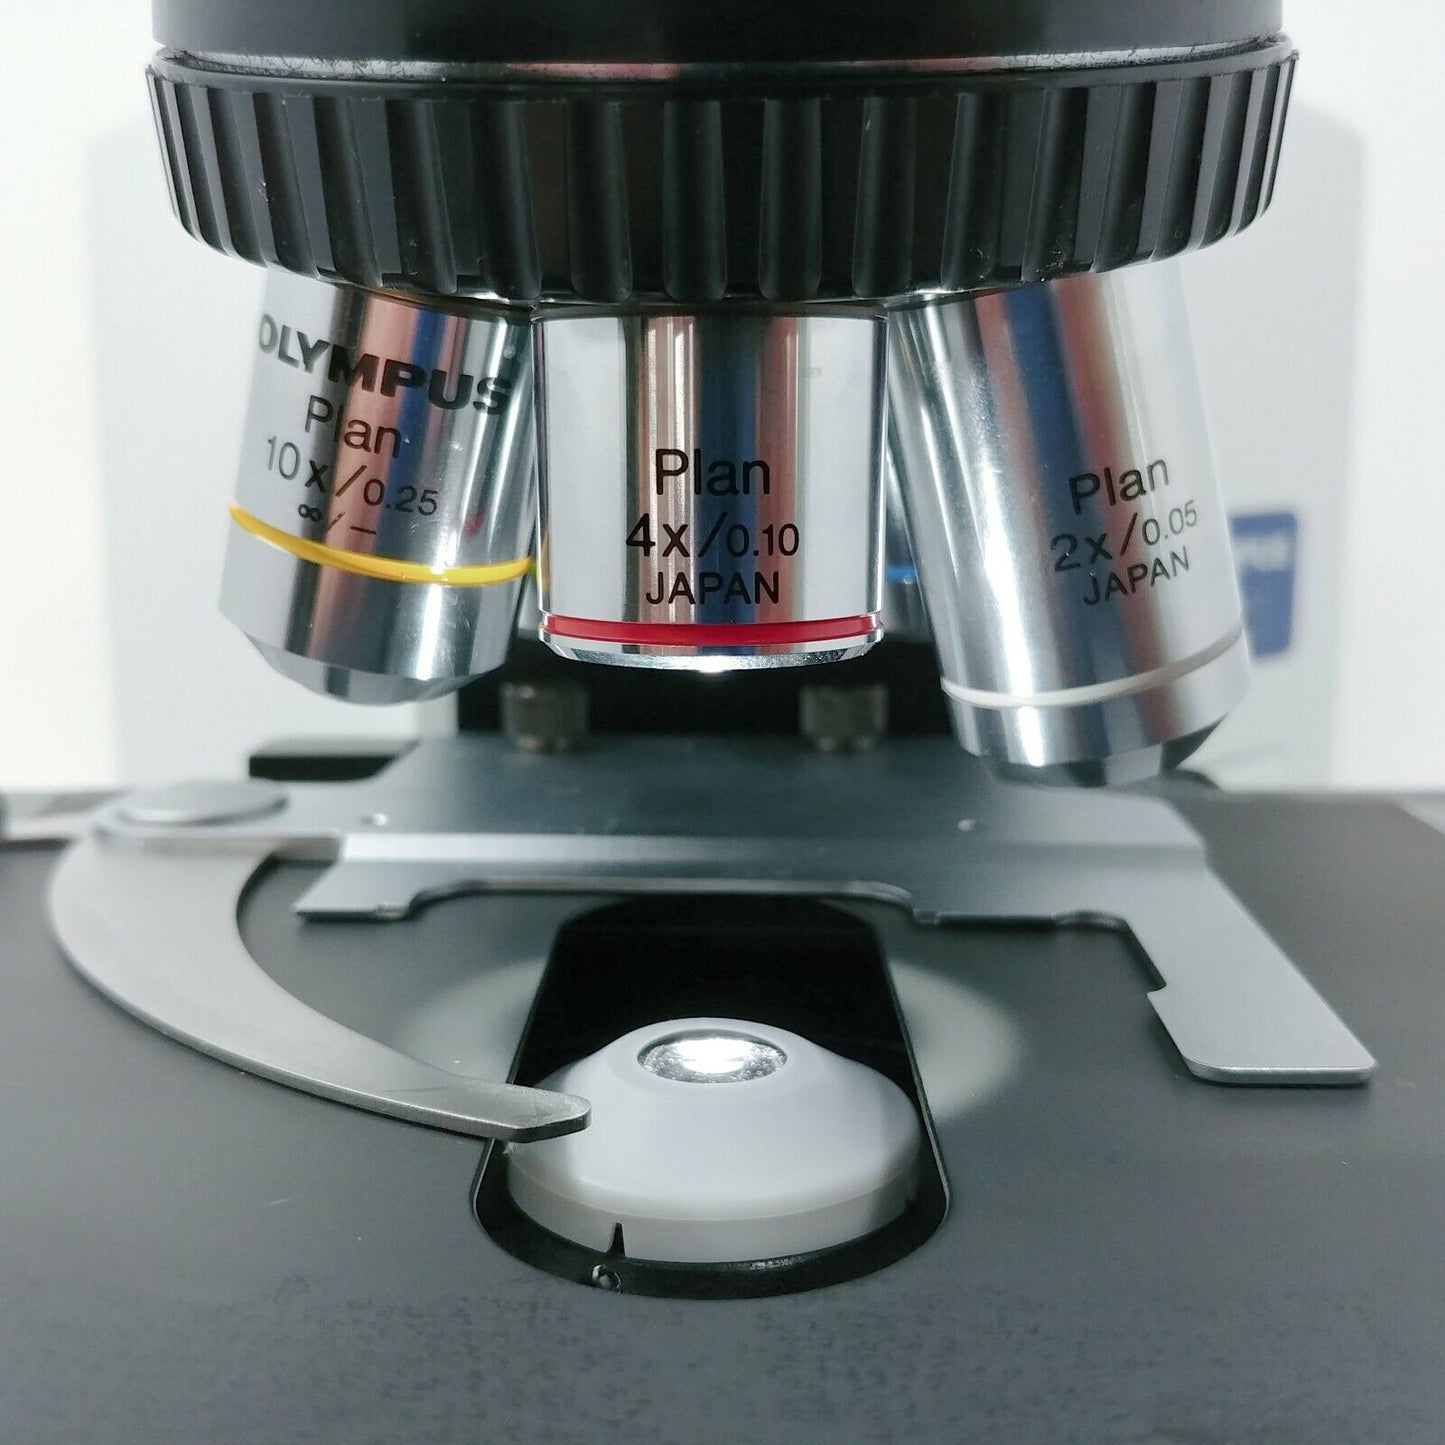 Olympus Microscope BX41 with 2x and Trinocular Head - microscopemarketplace